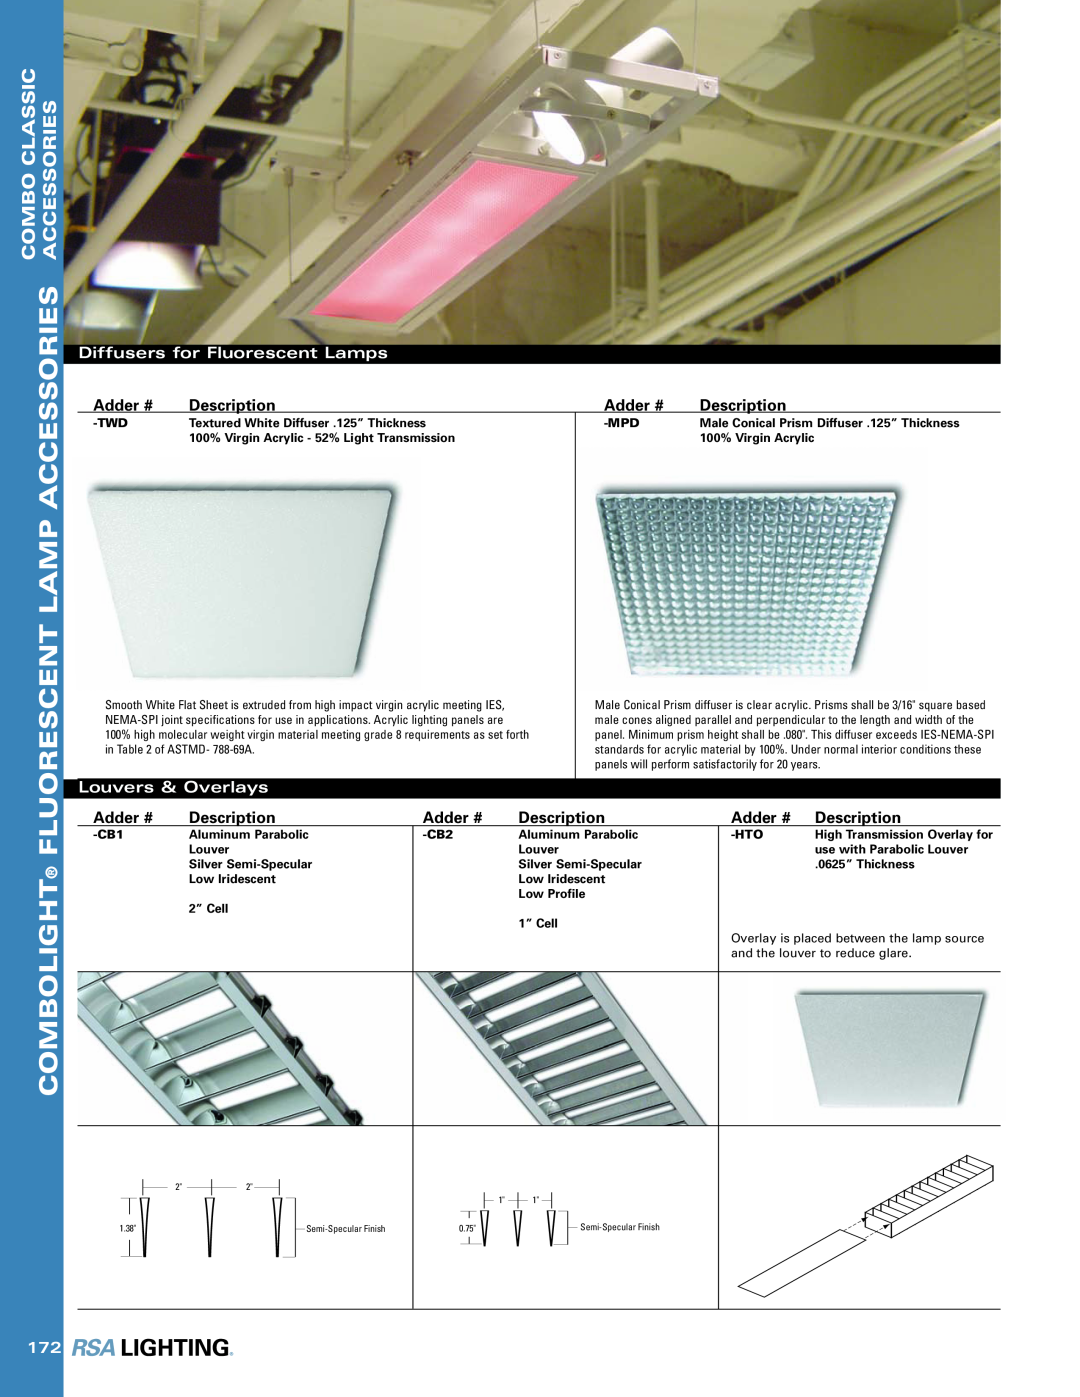 Cooper Lighting Suspended Series manual Combolight Fluorescent Lamp Accessories, Adder #, Description 